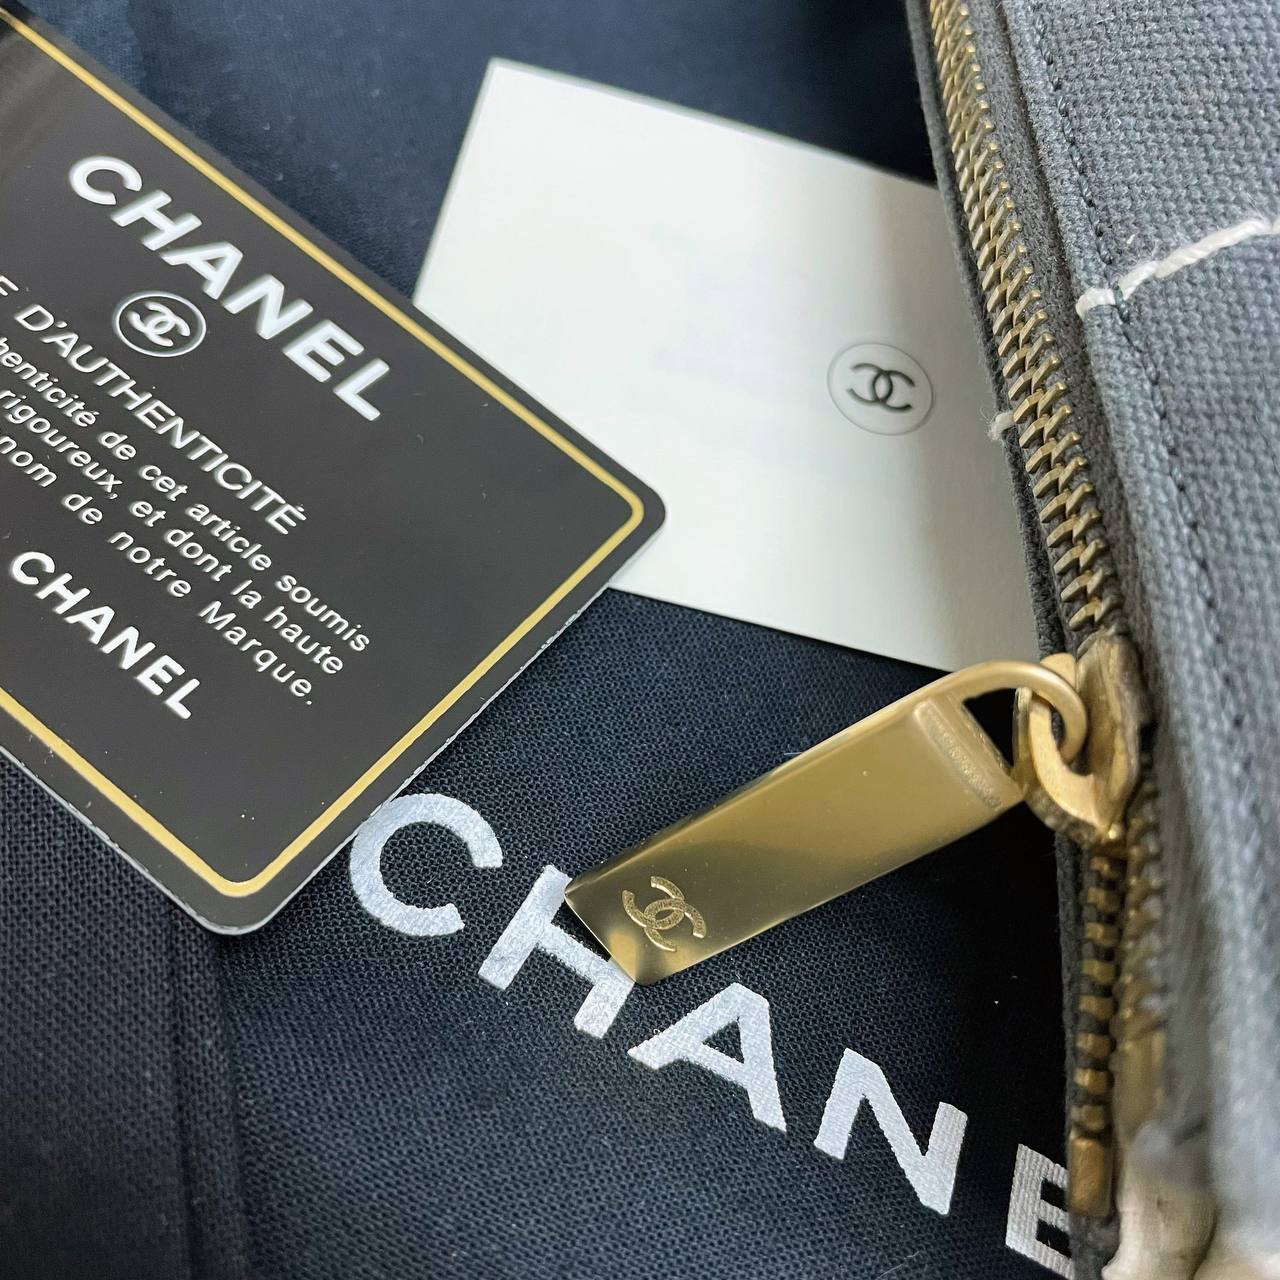 【 In-Stock 】Chanel 香奈兒 朱古力格帆布手提包